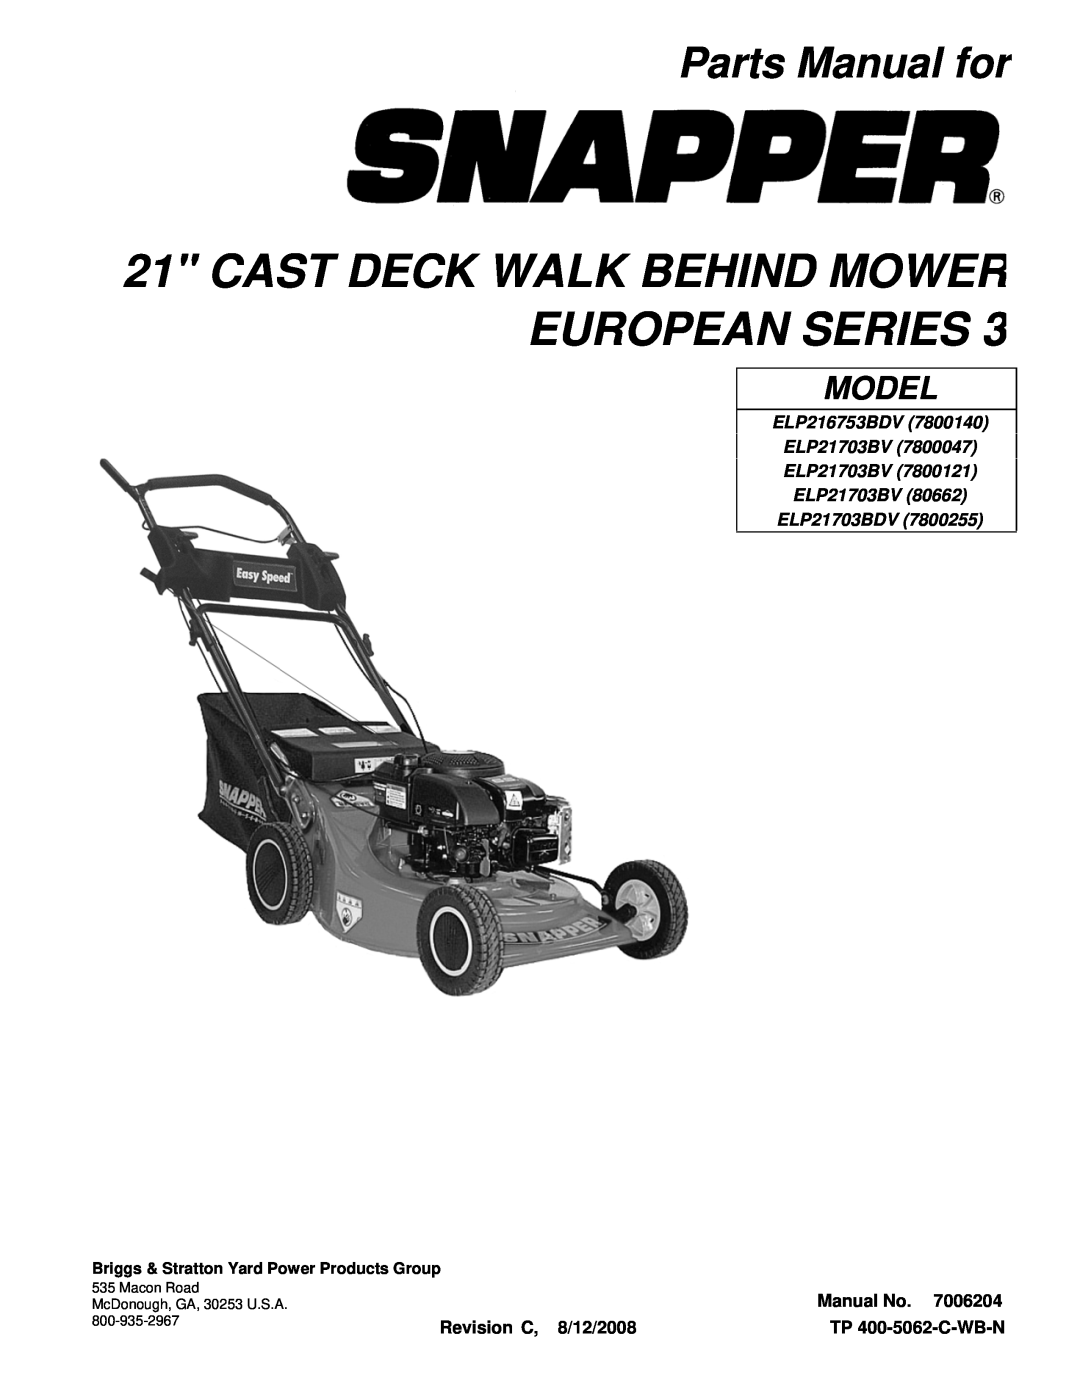 Snapper ELP216753BDV (7800140) manual Parts Manual for, Cast Deck Walk Behind Mower European Series, Model, ELP21703BDV 